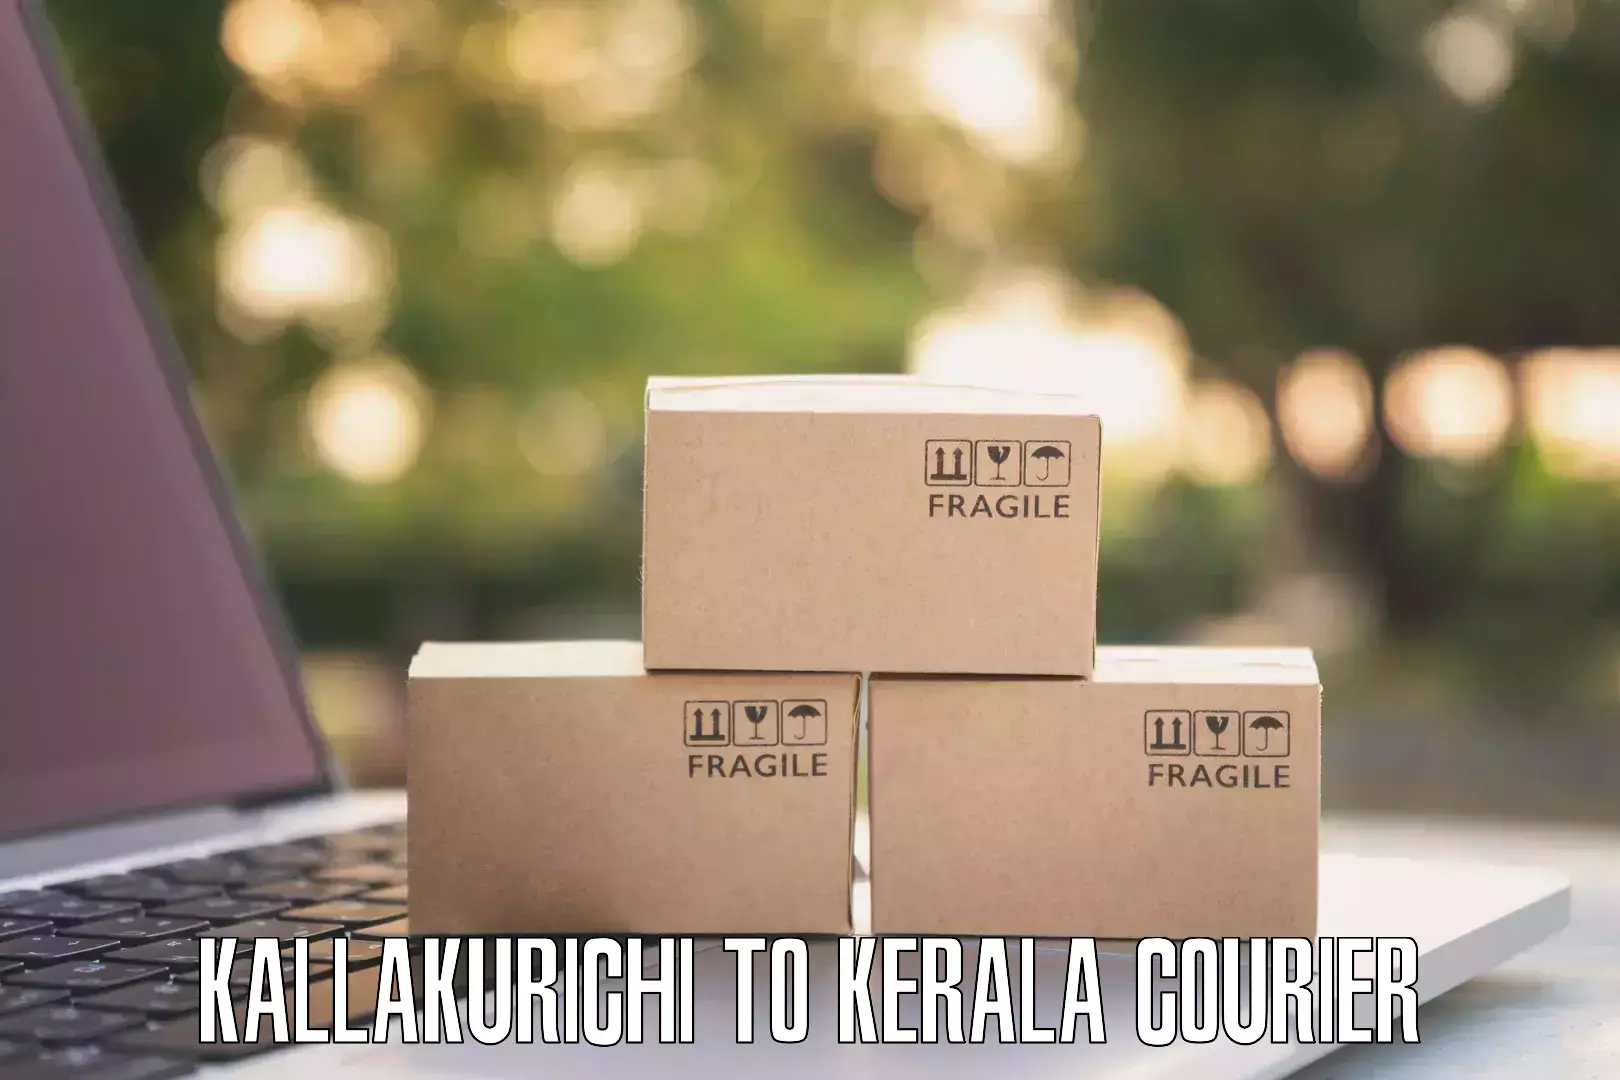 Easy access courier services Kallakurichi to Ponnani